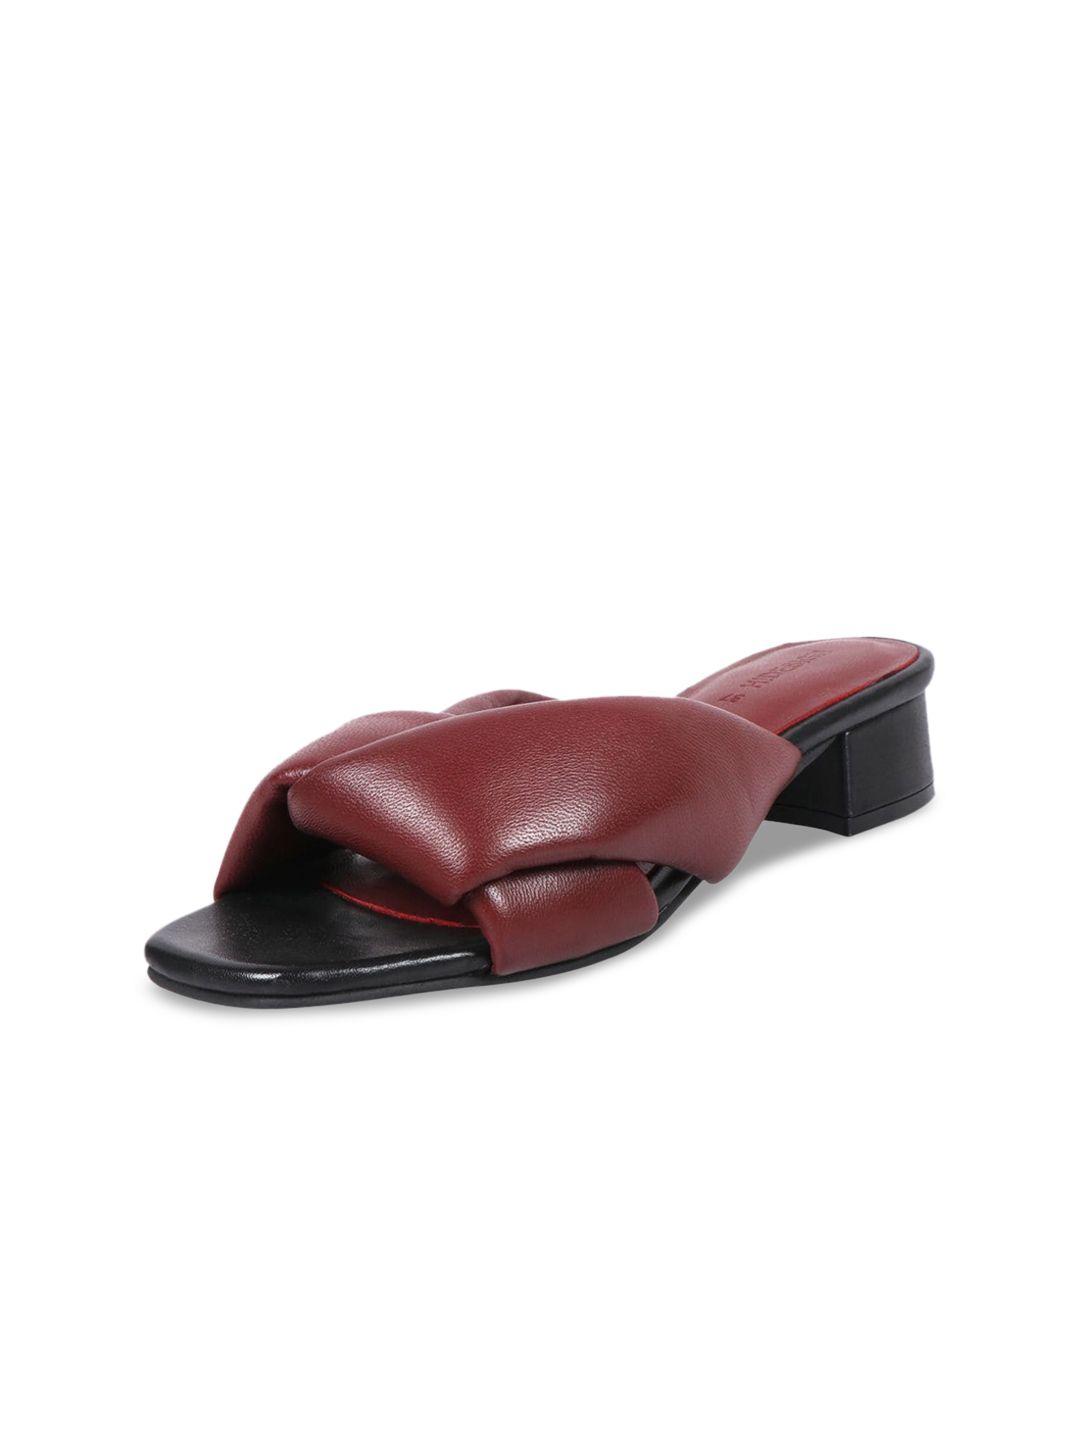 hidesign-lille-leather-open-toe-block-heels